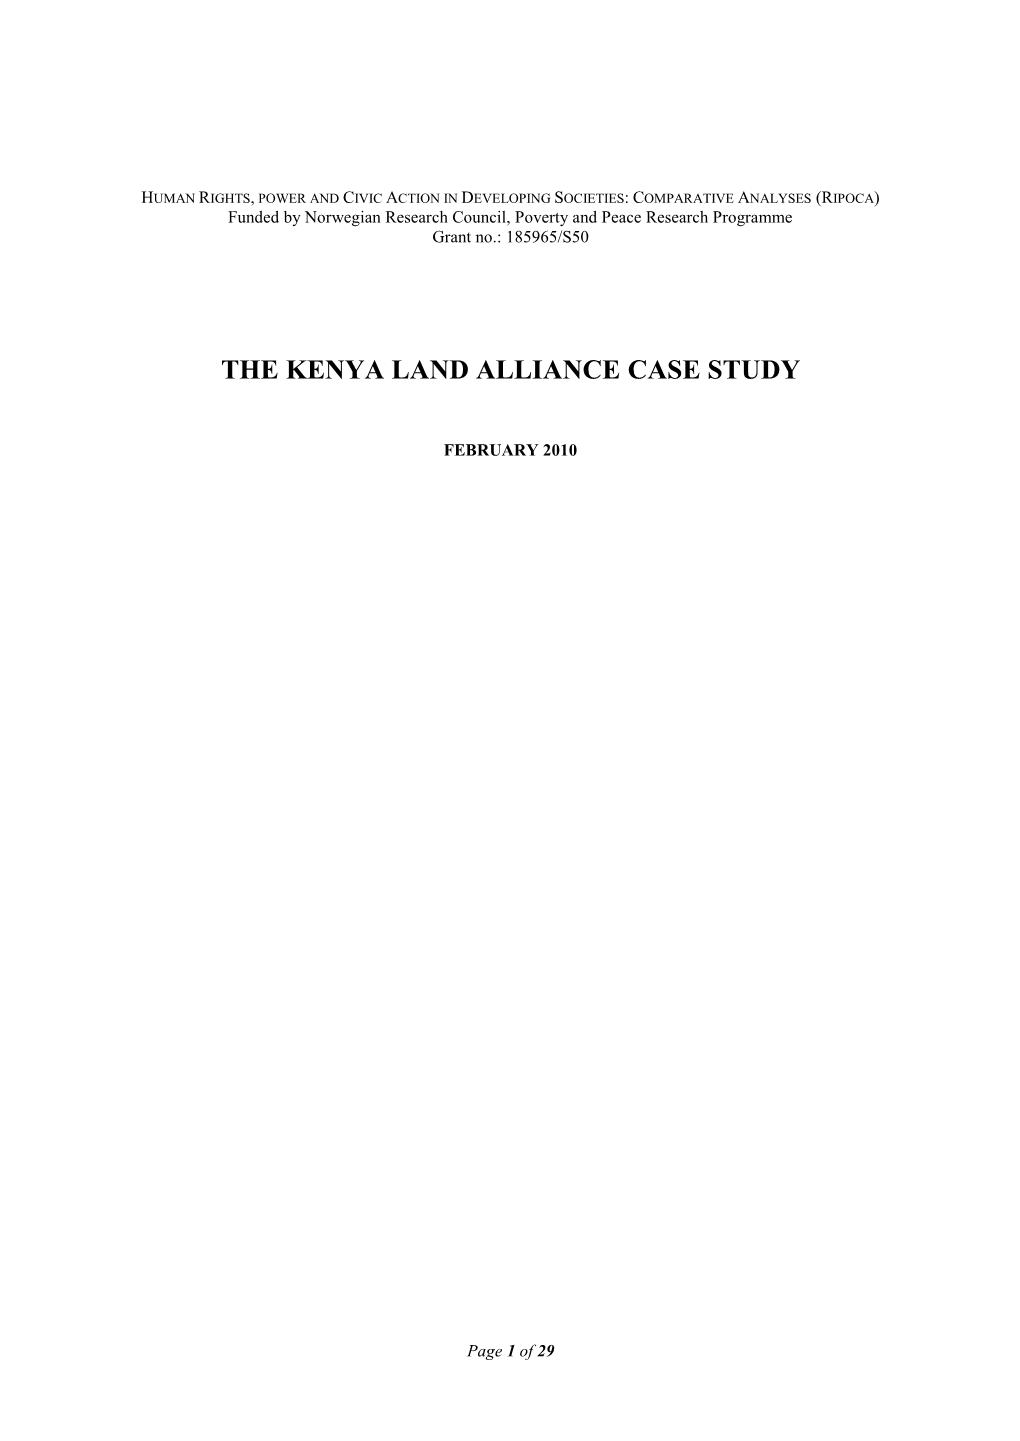 The Kenya Land Alliance Case Study